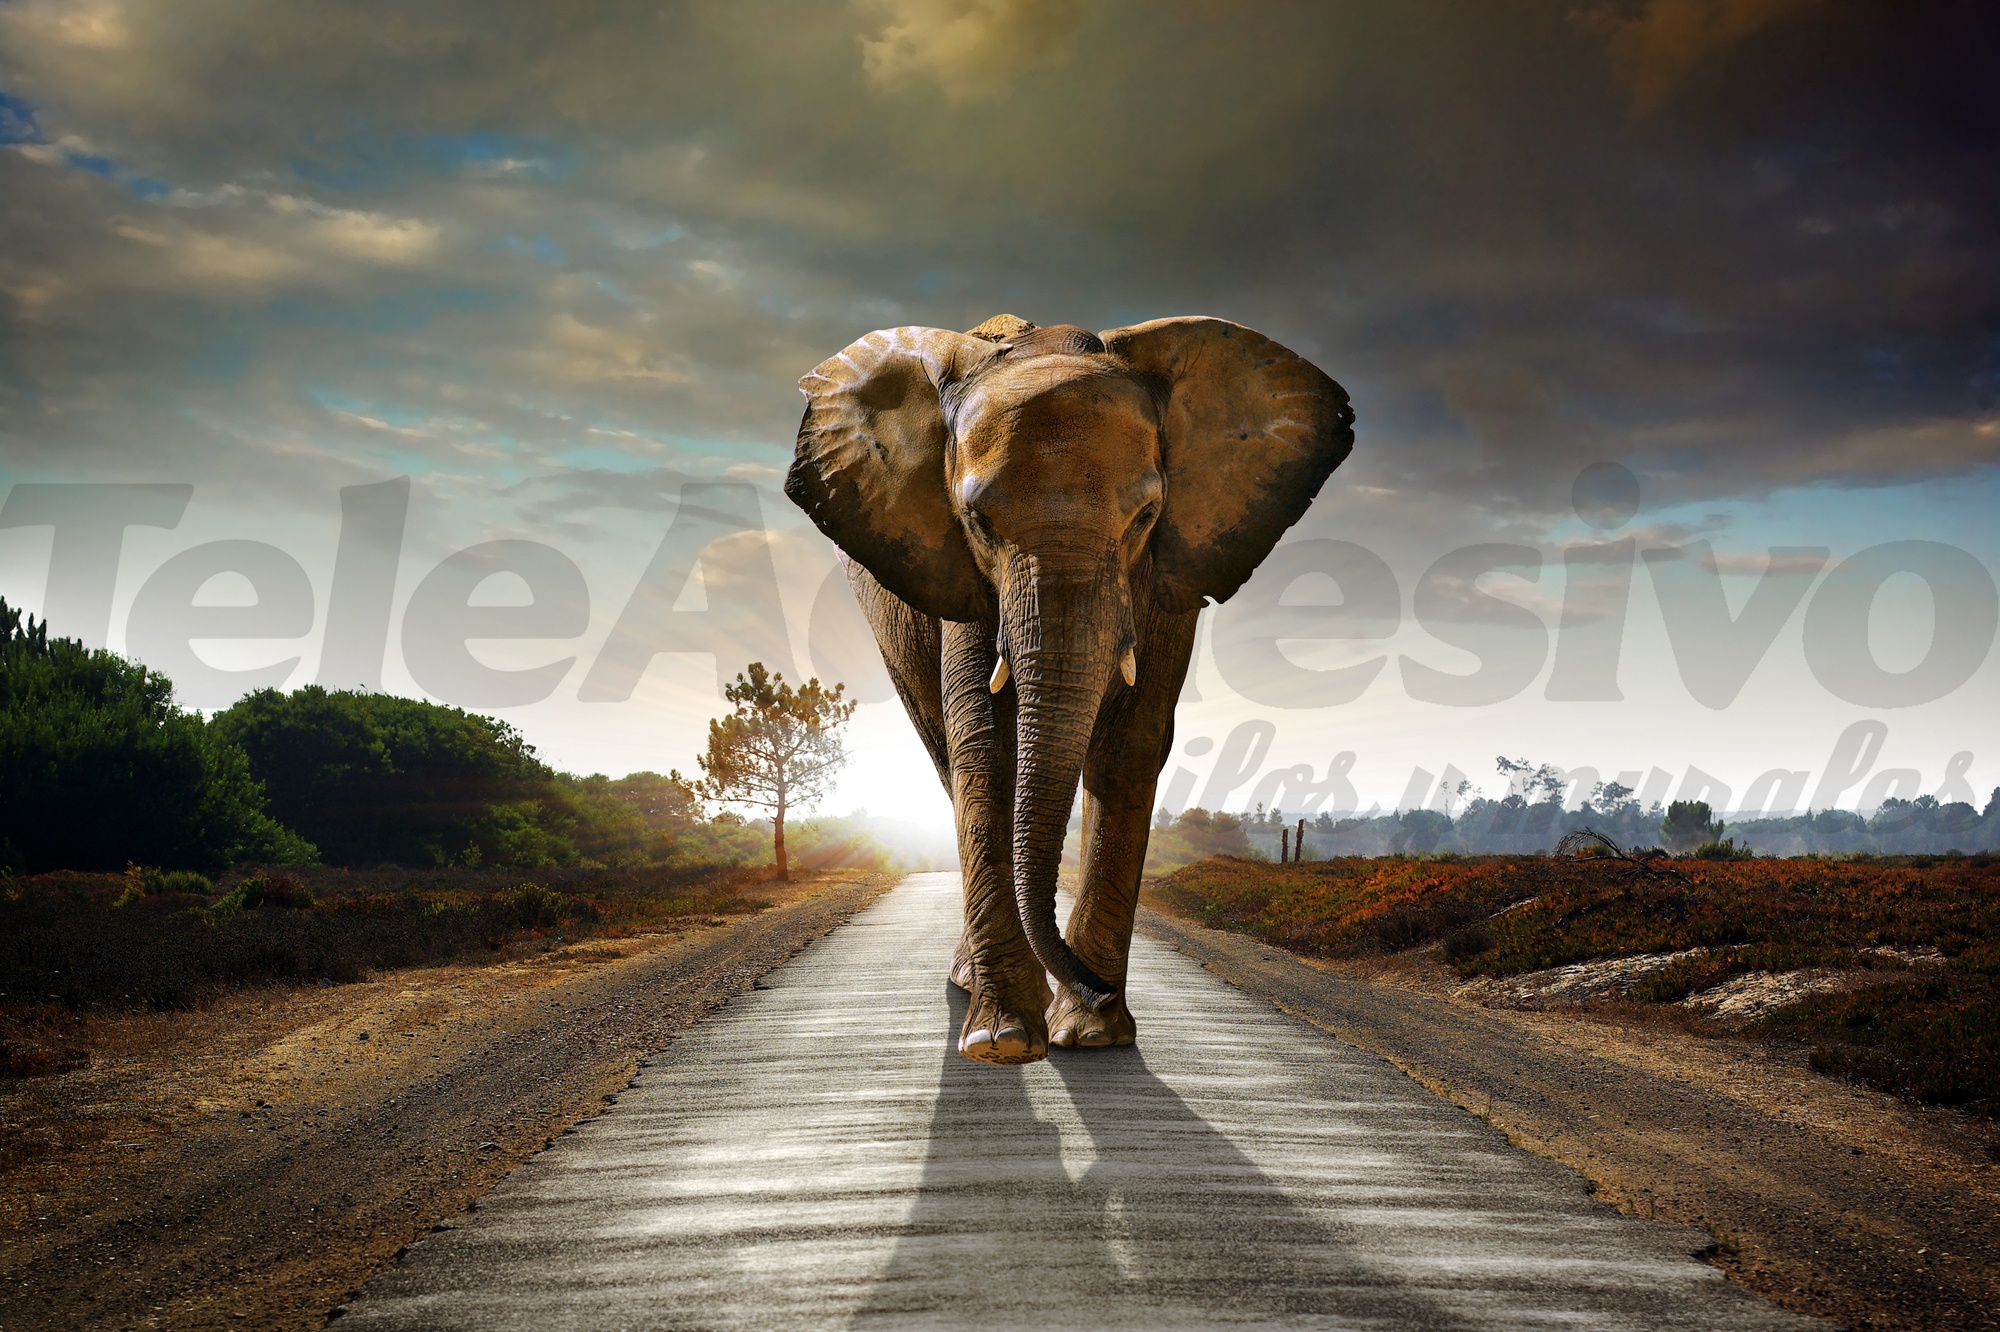 Fotomurali : Elefante